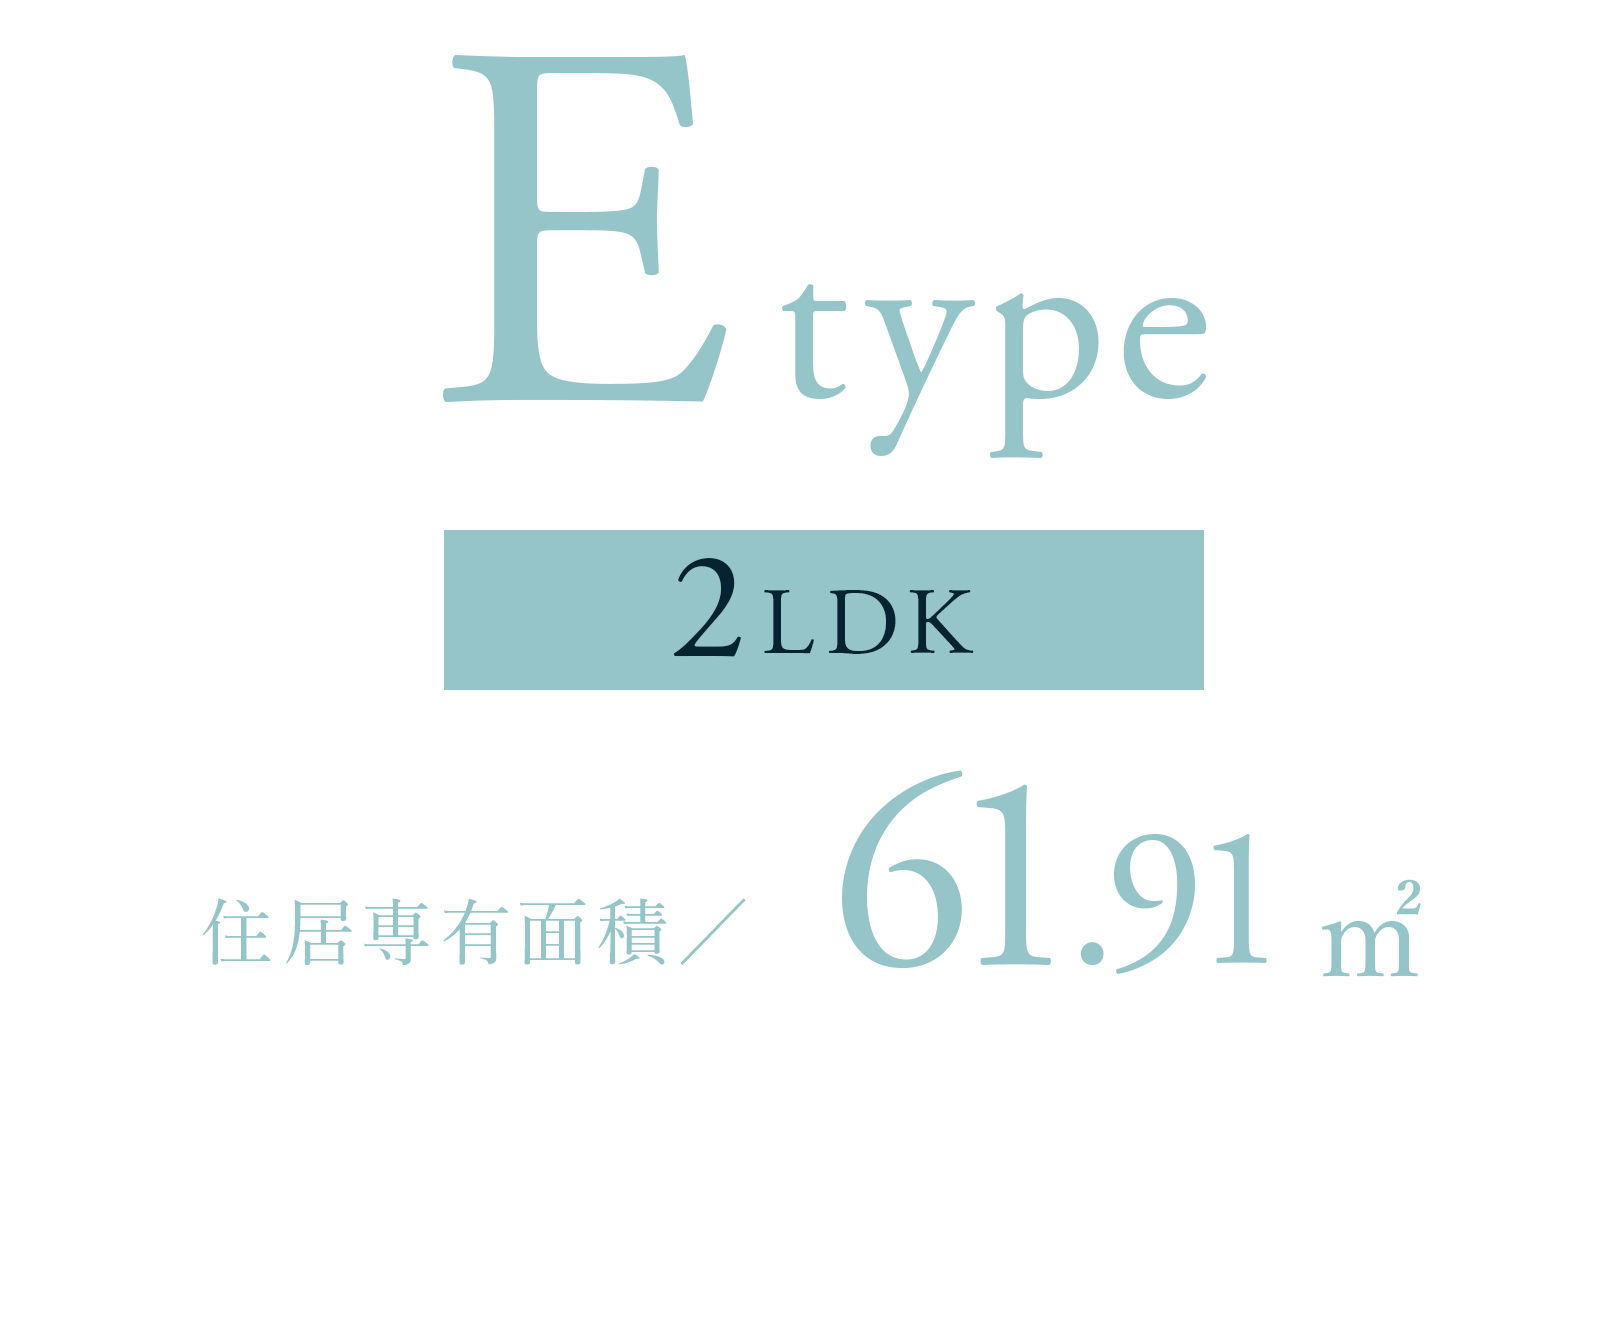 Etype